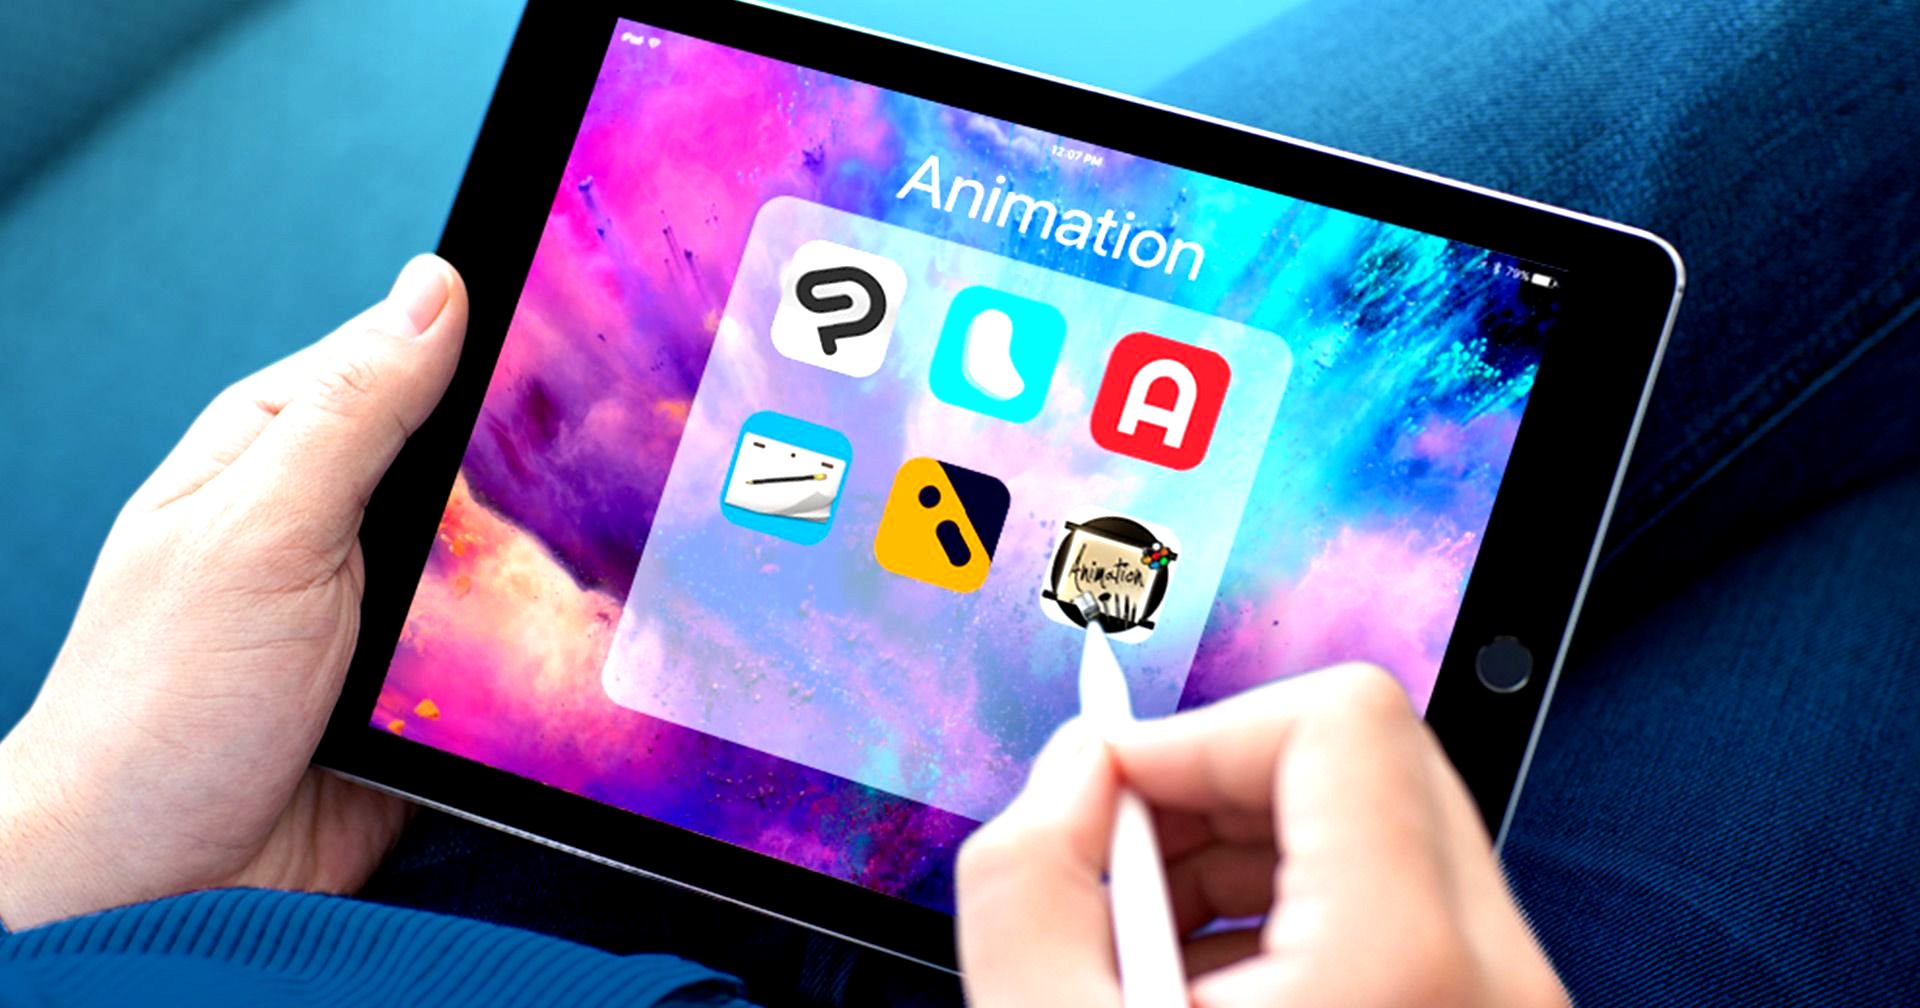 How to make Animation on iPad